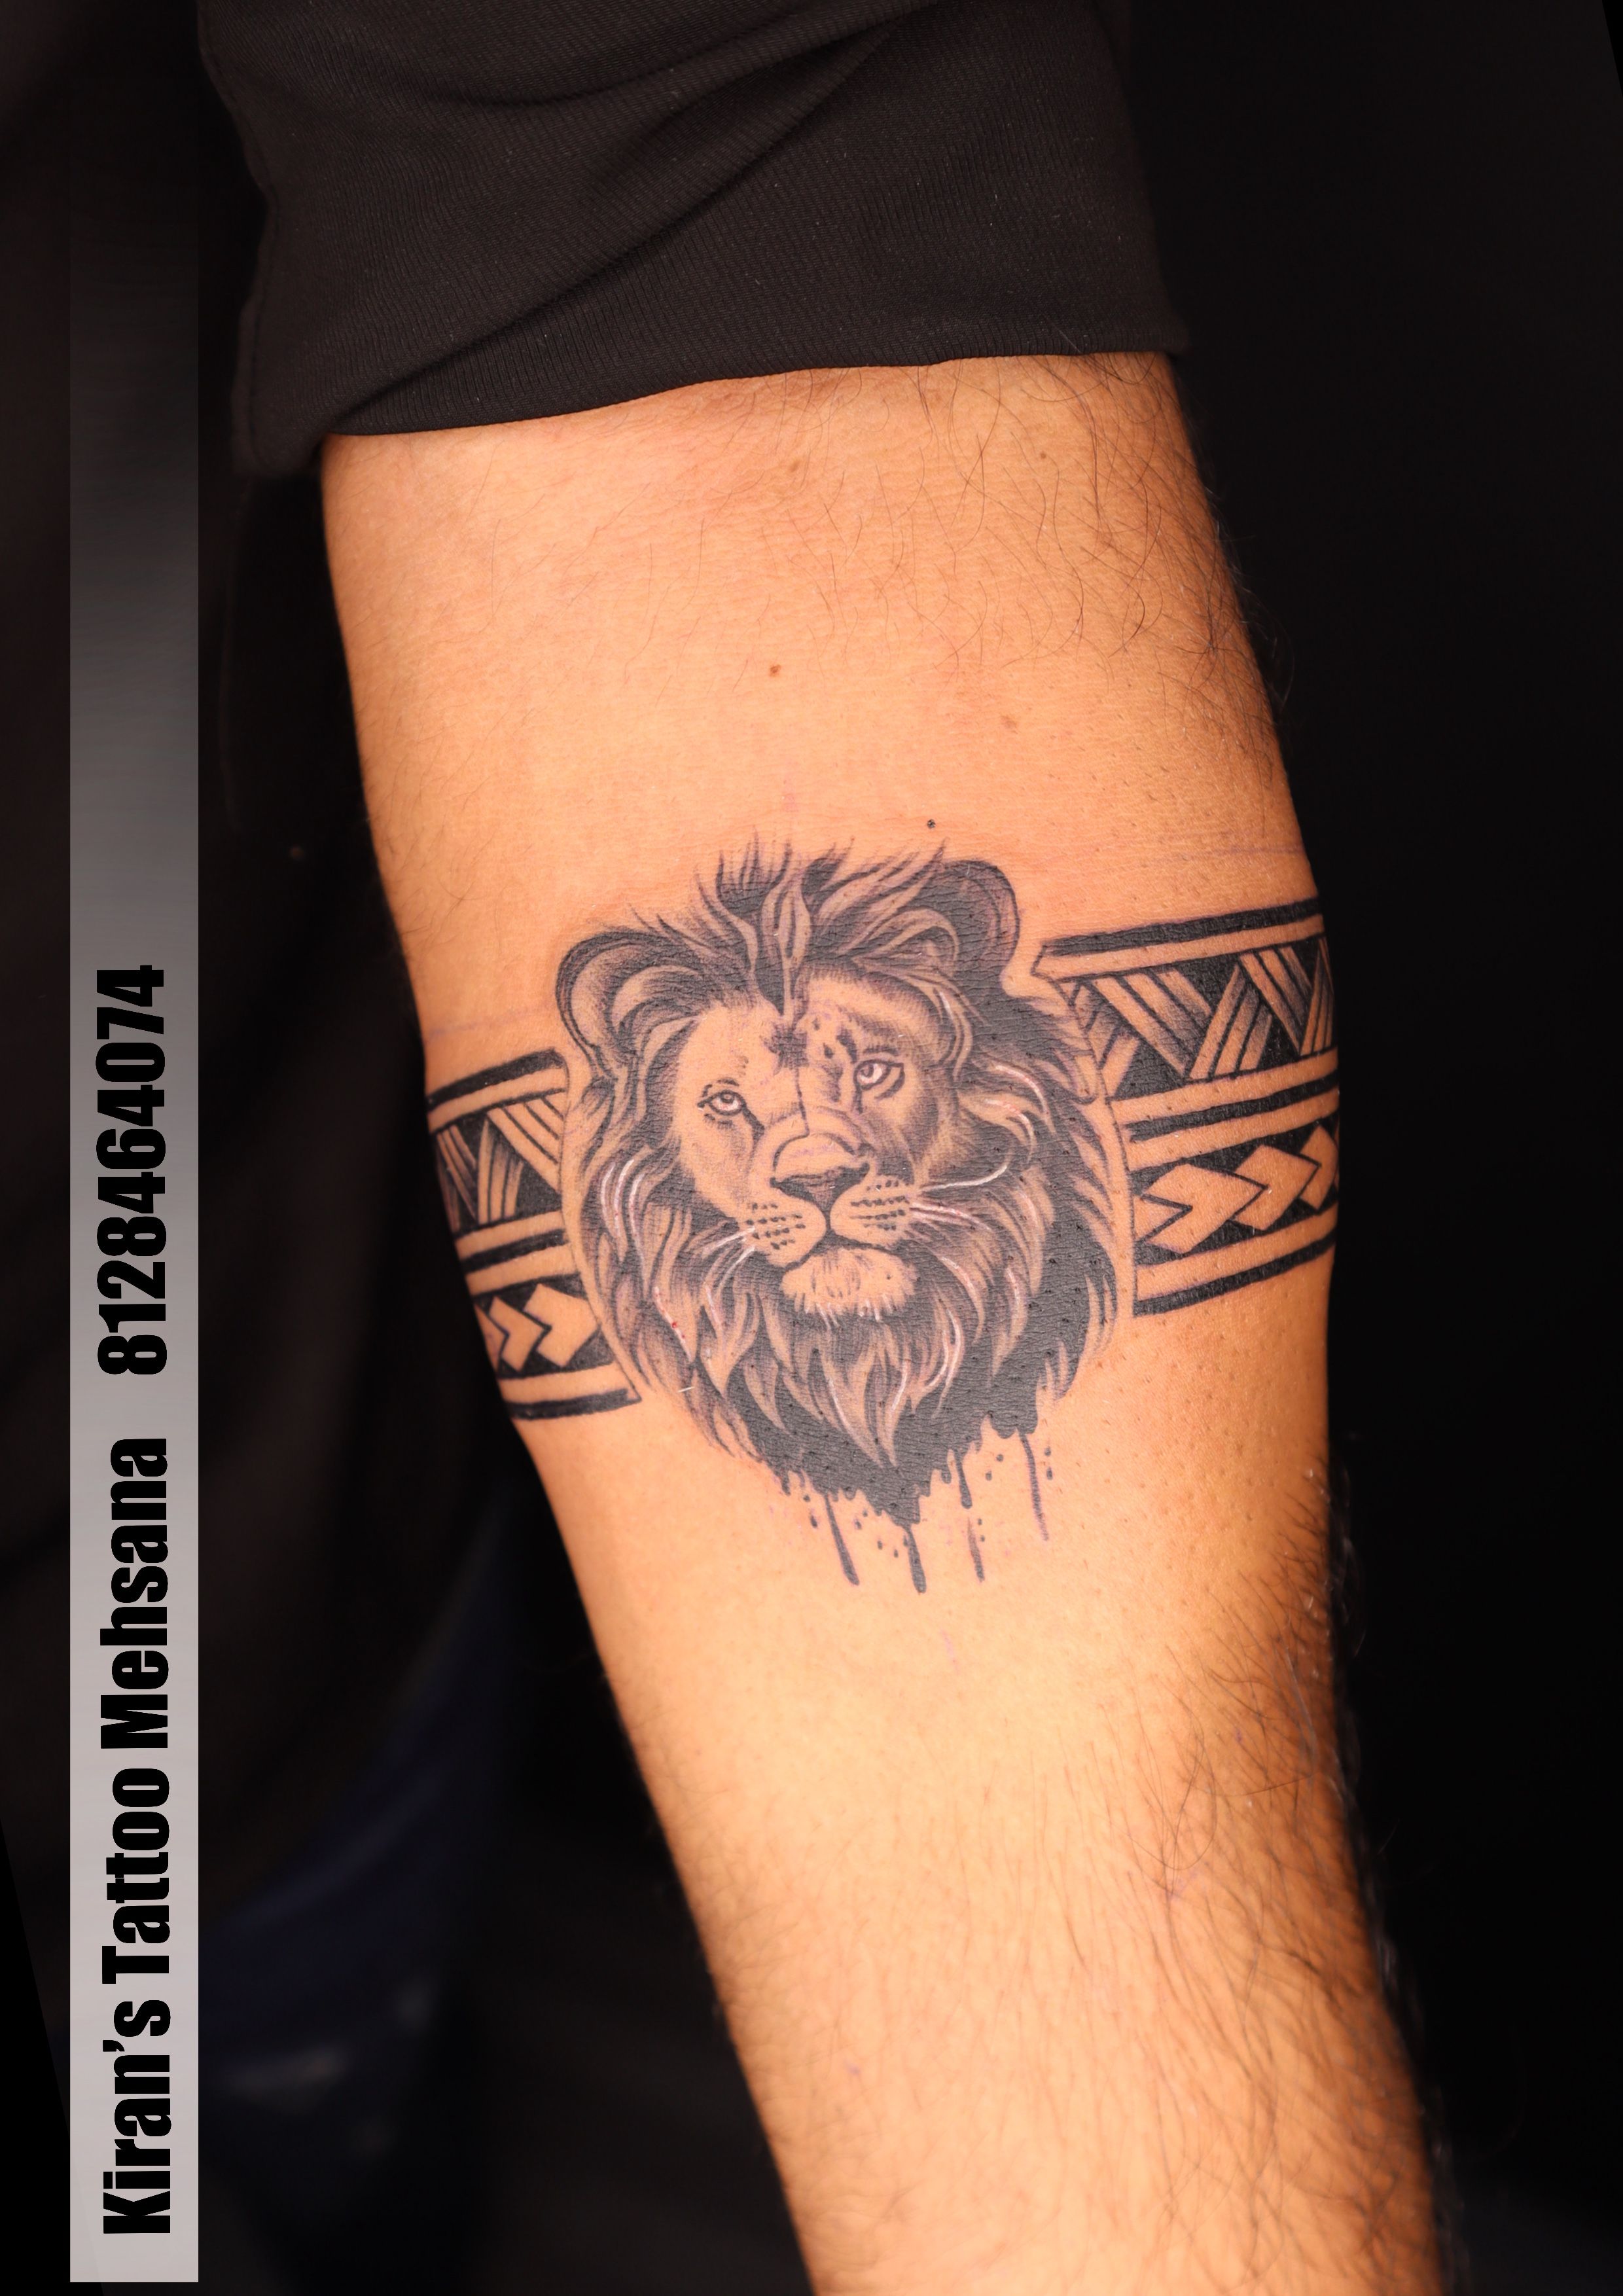 lion arm band tattoo#short #tattoo #vairal #artist #armbandtattoo  #viralvideo #song #viewers #like - YouTube